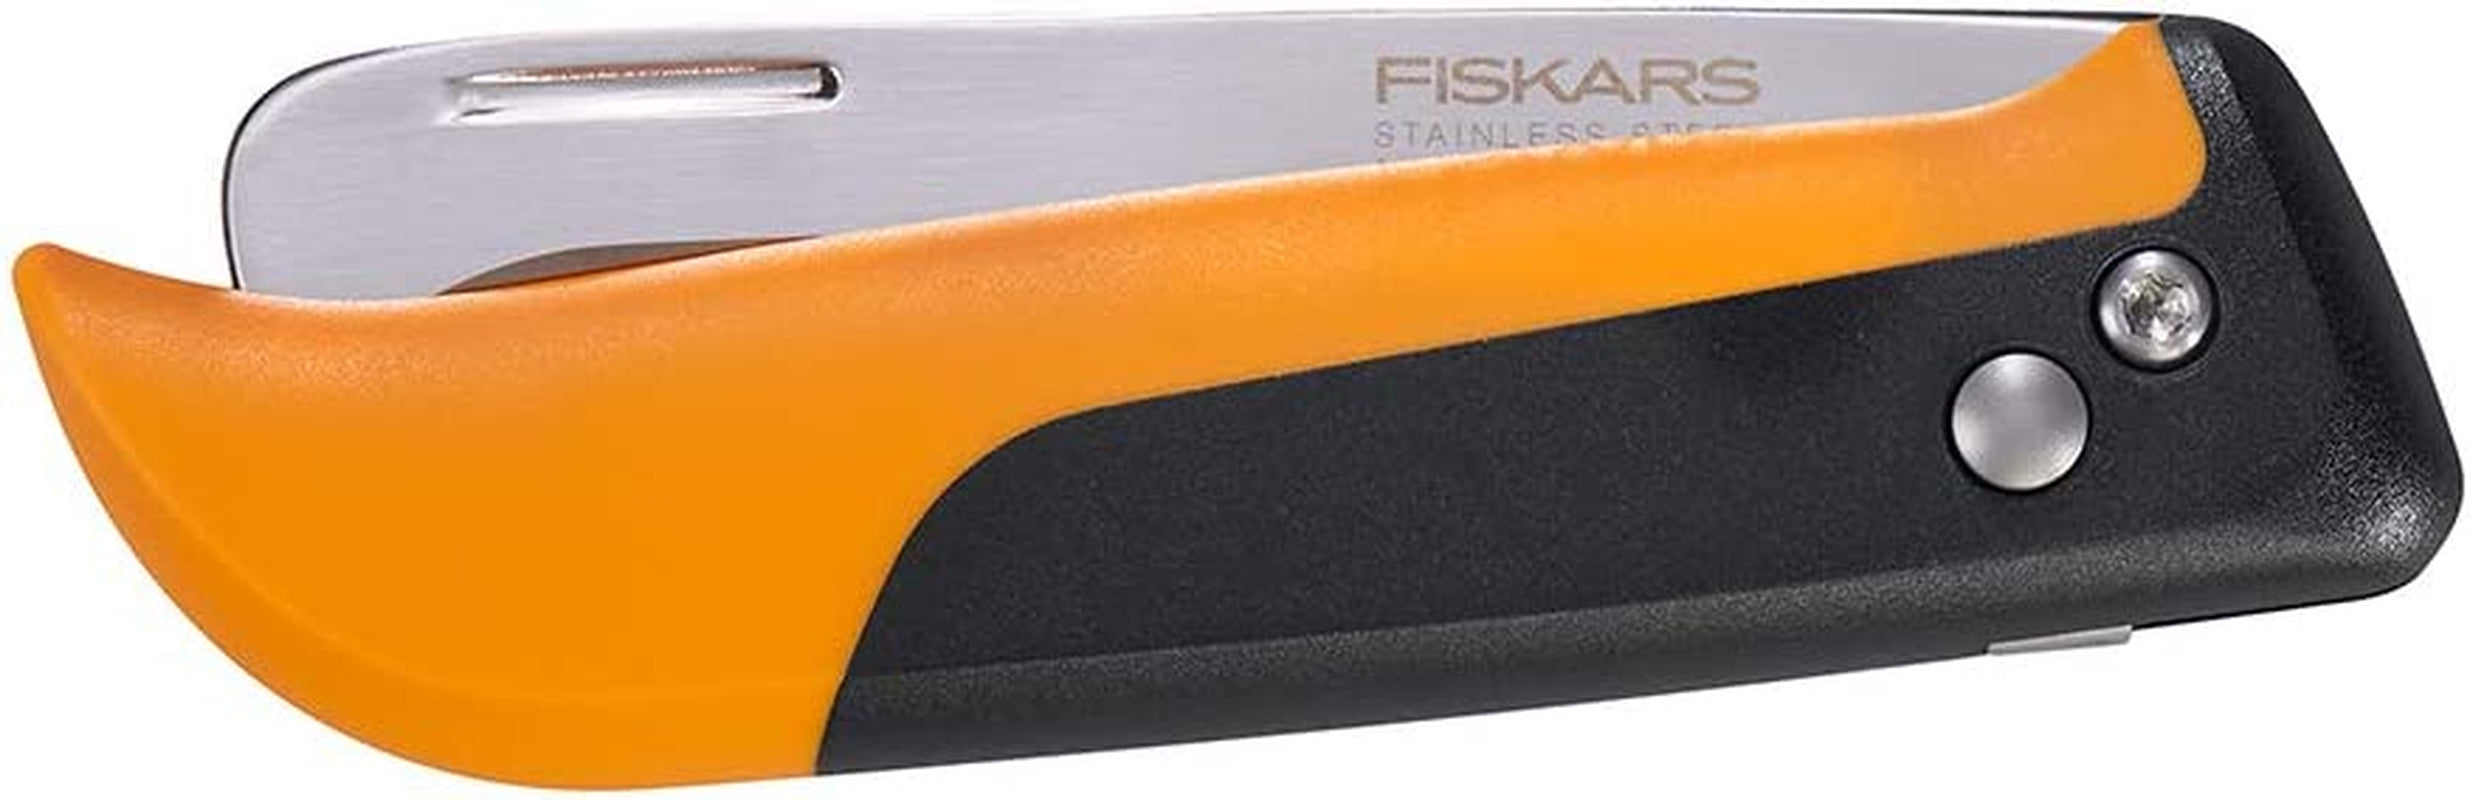 Fiskars, Fiskars 340140-1001 Folding Produce Harvesting Knife, Orange/Black